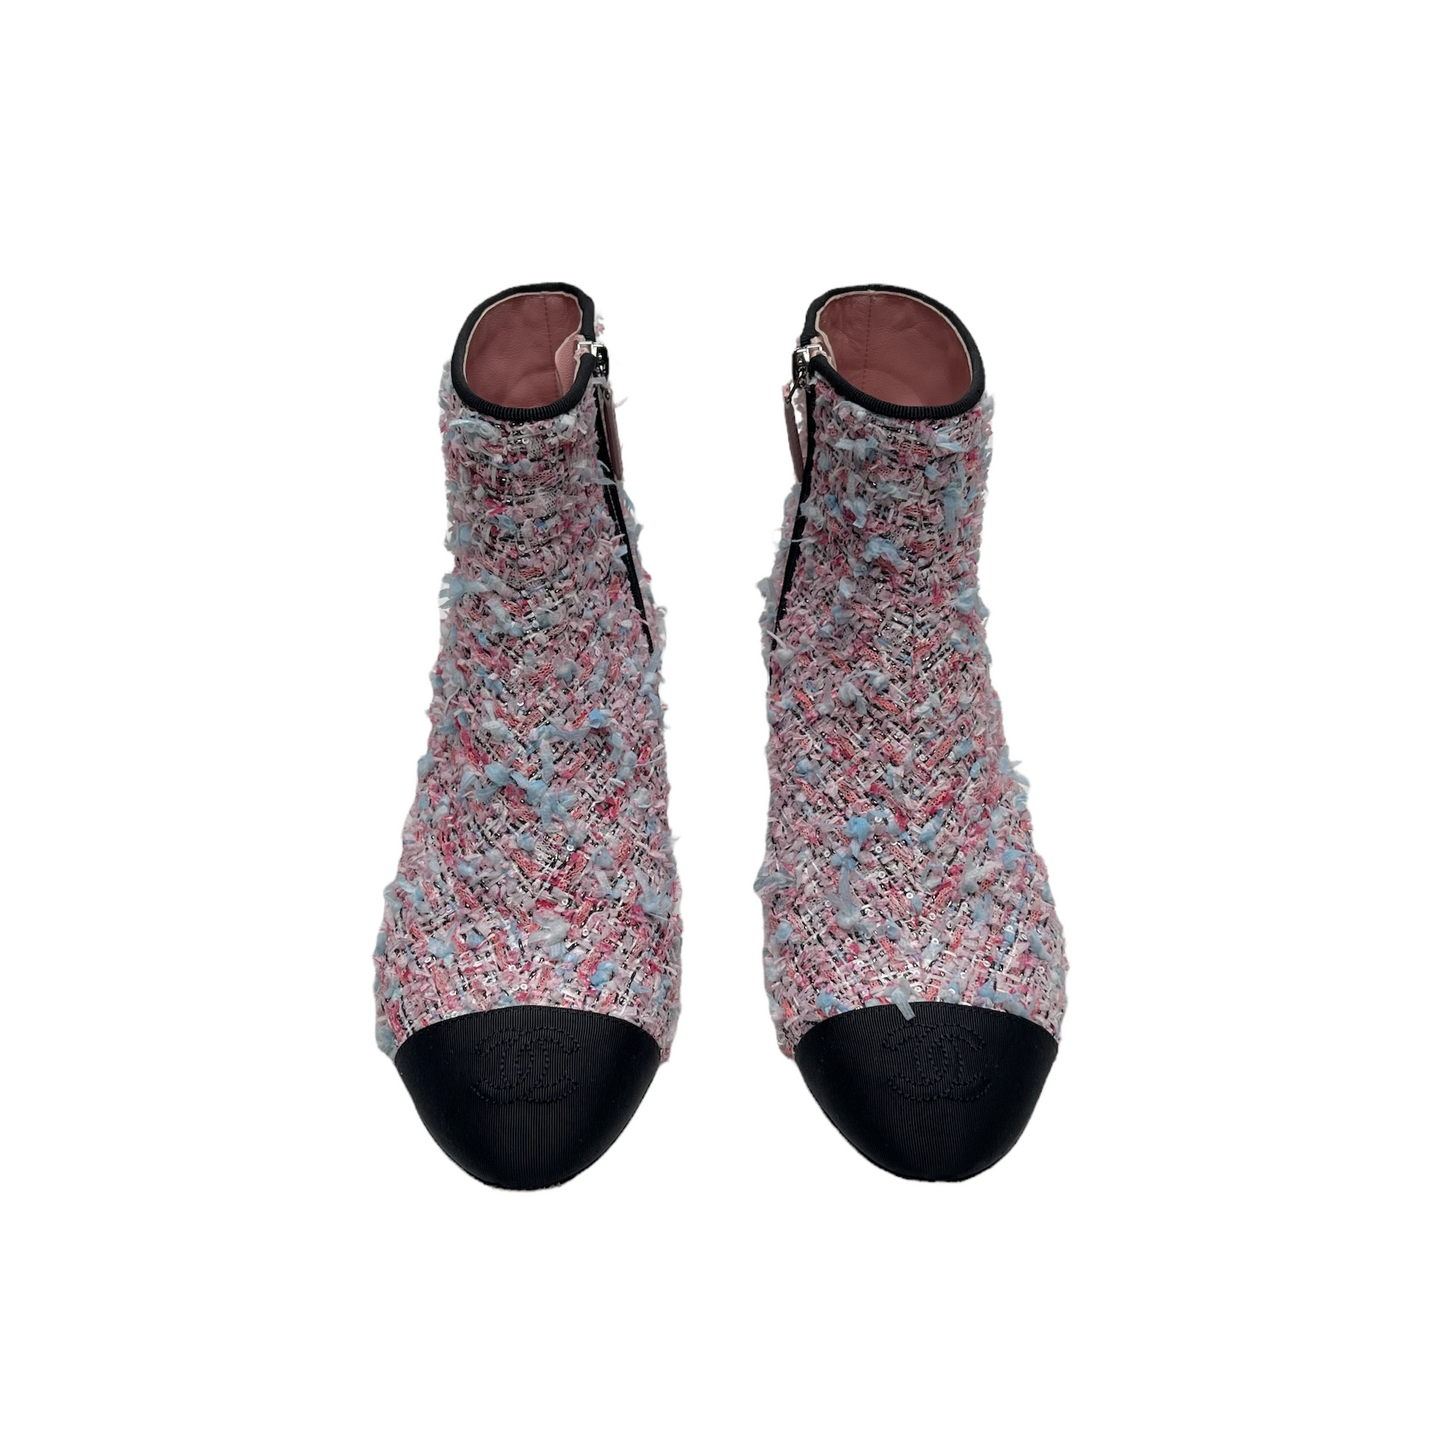 Tweed Pink Boots - 7.5